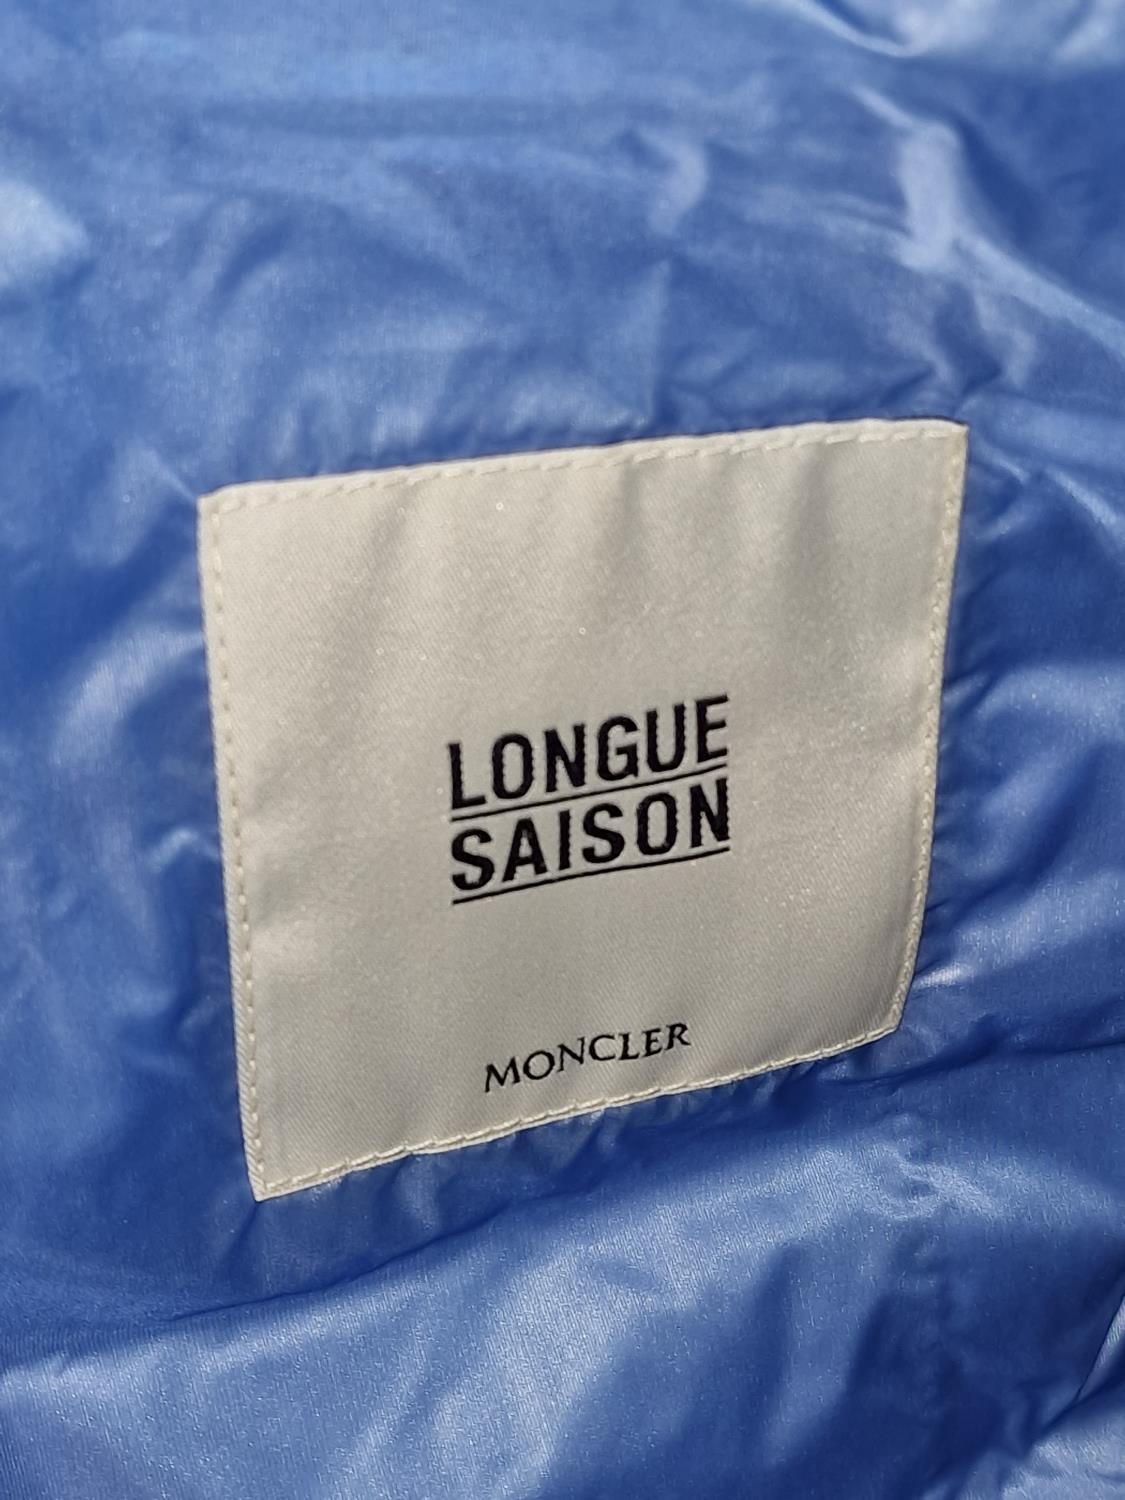 Moncler Gilet jacket BNWT size 3 (REF 229). - Image 3 of 3